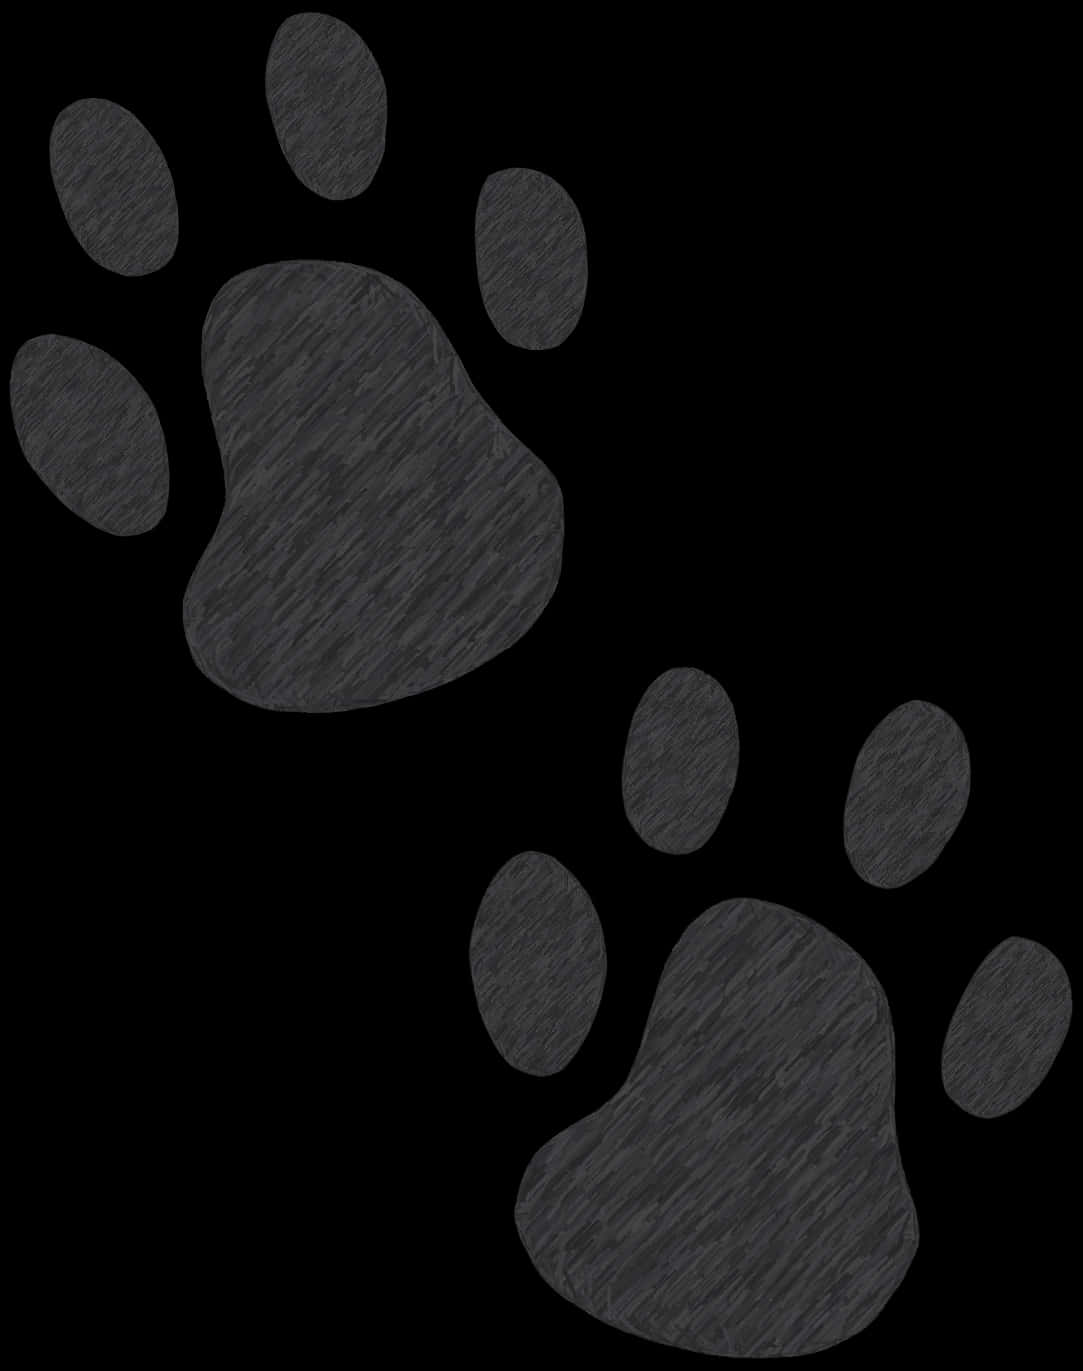 Textured Dog Paw Printson Black Background PNG image